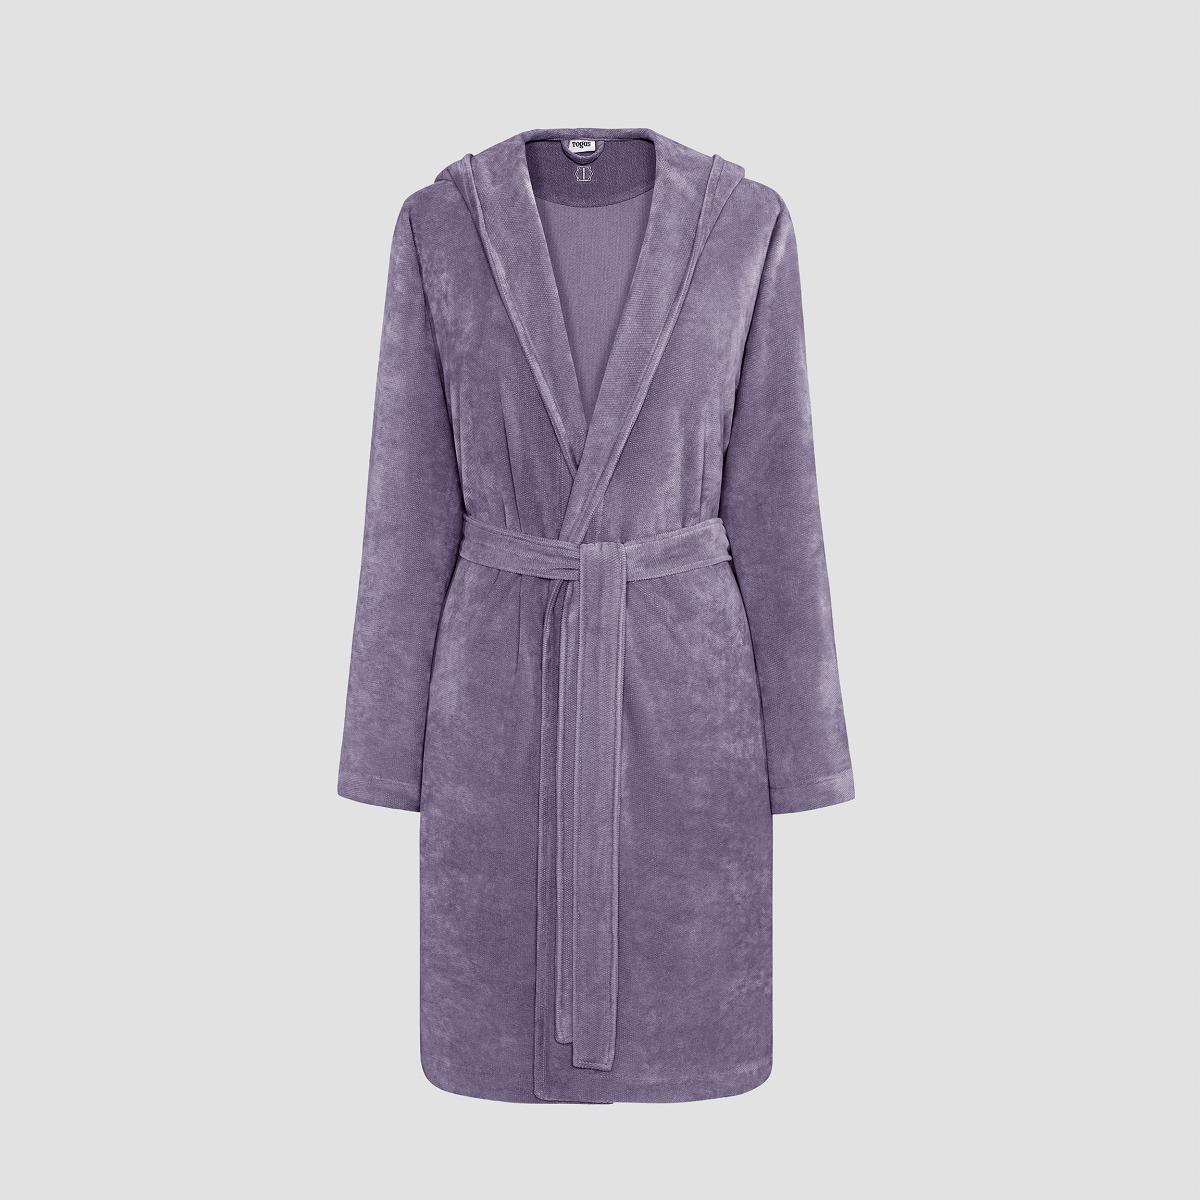 Халат Togas Талия фиолетовый XL(50) жен халат сабрина фиолетовый р 56